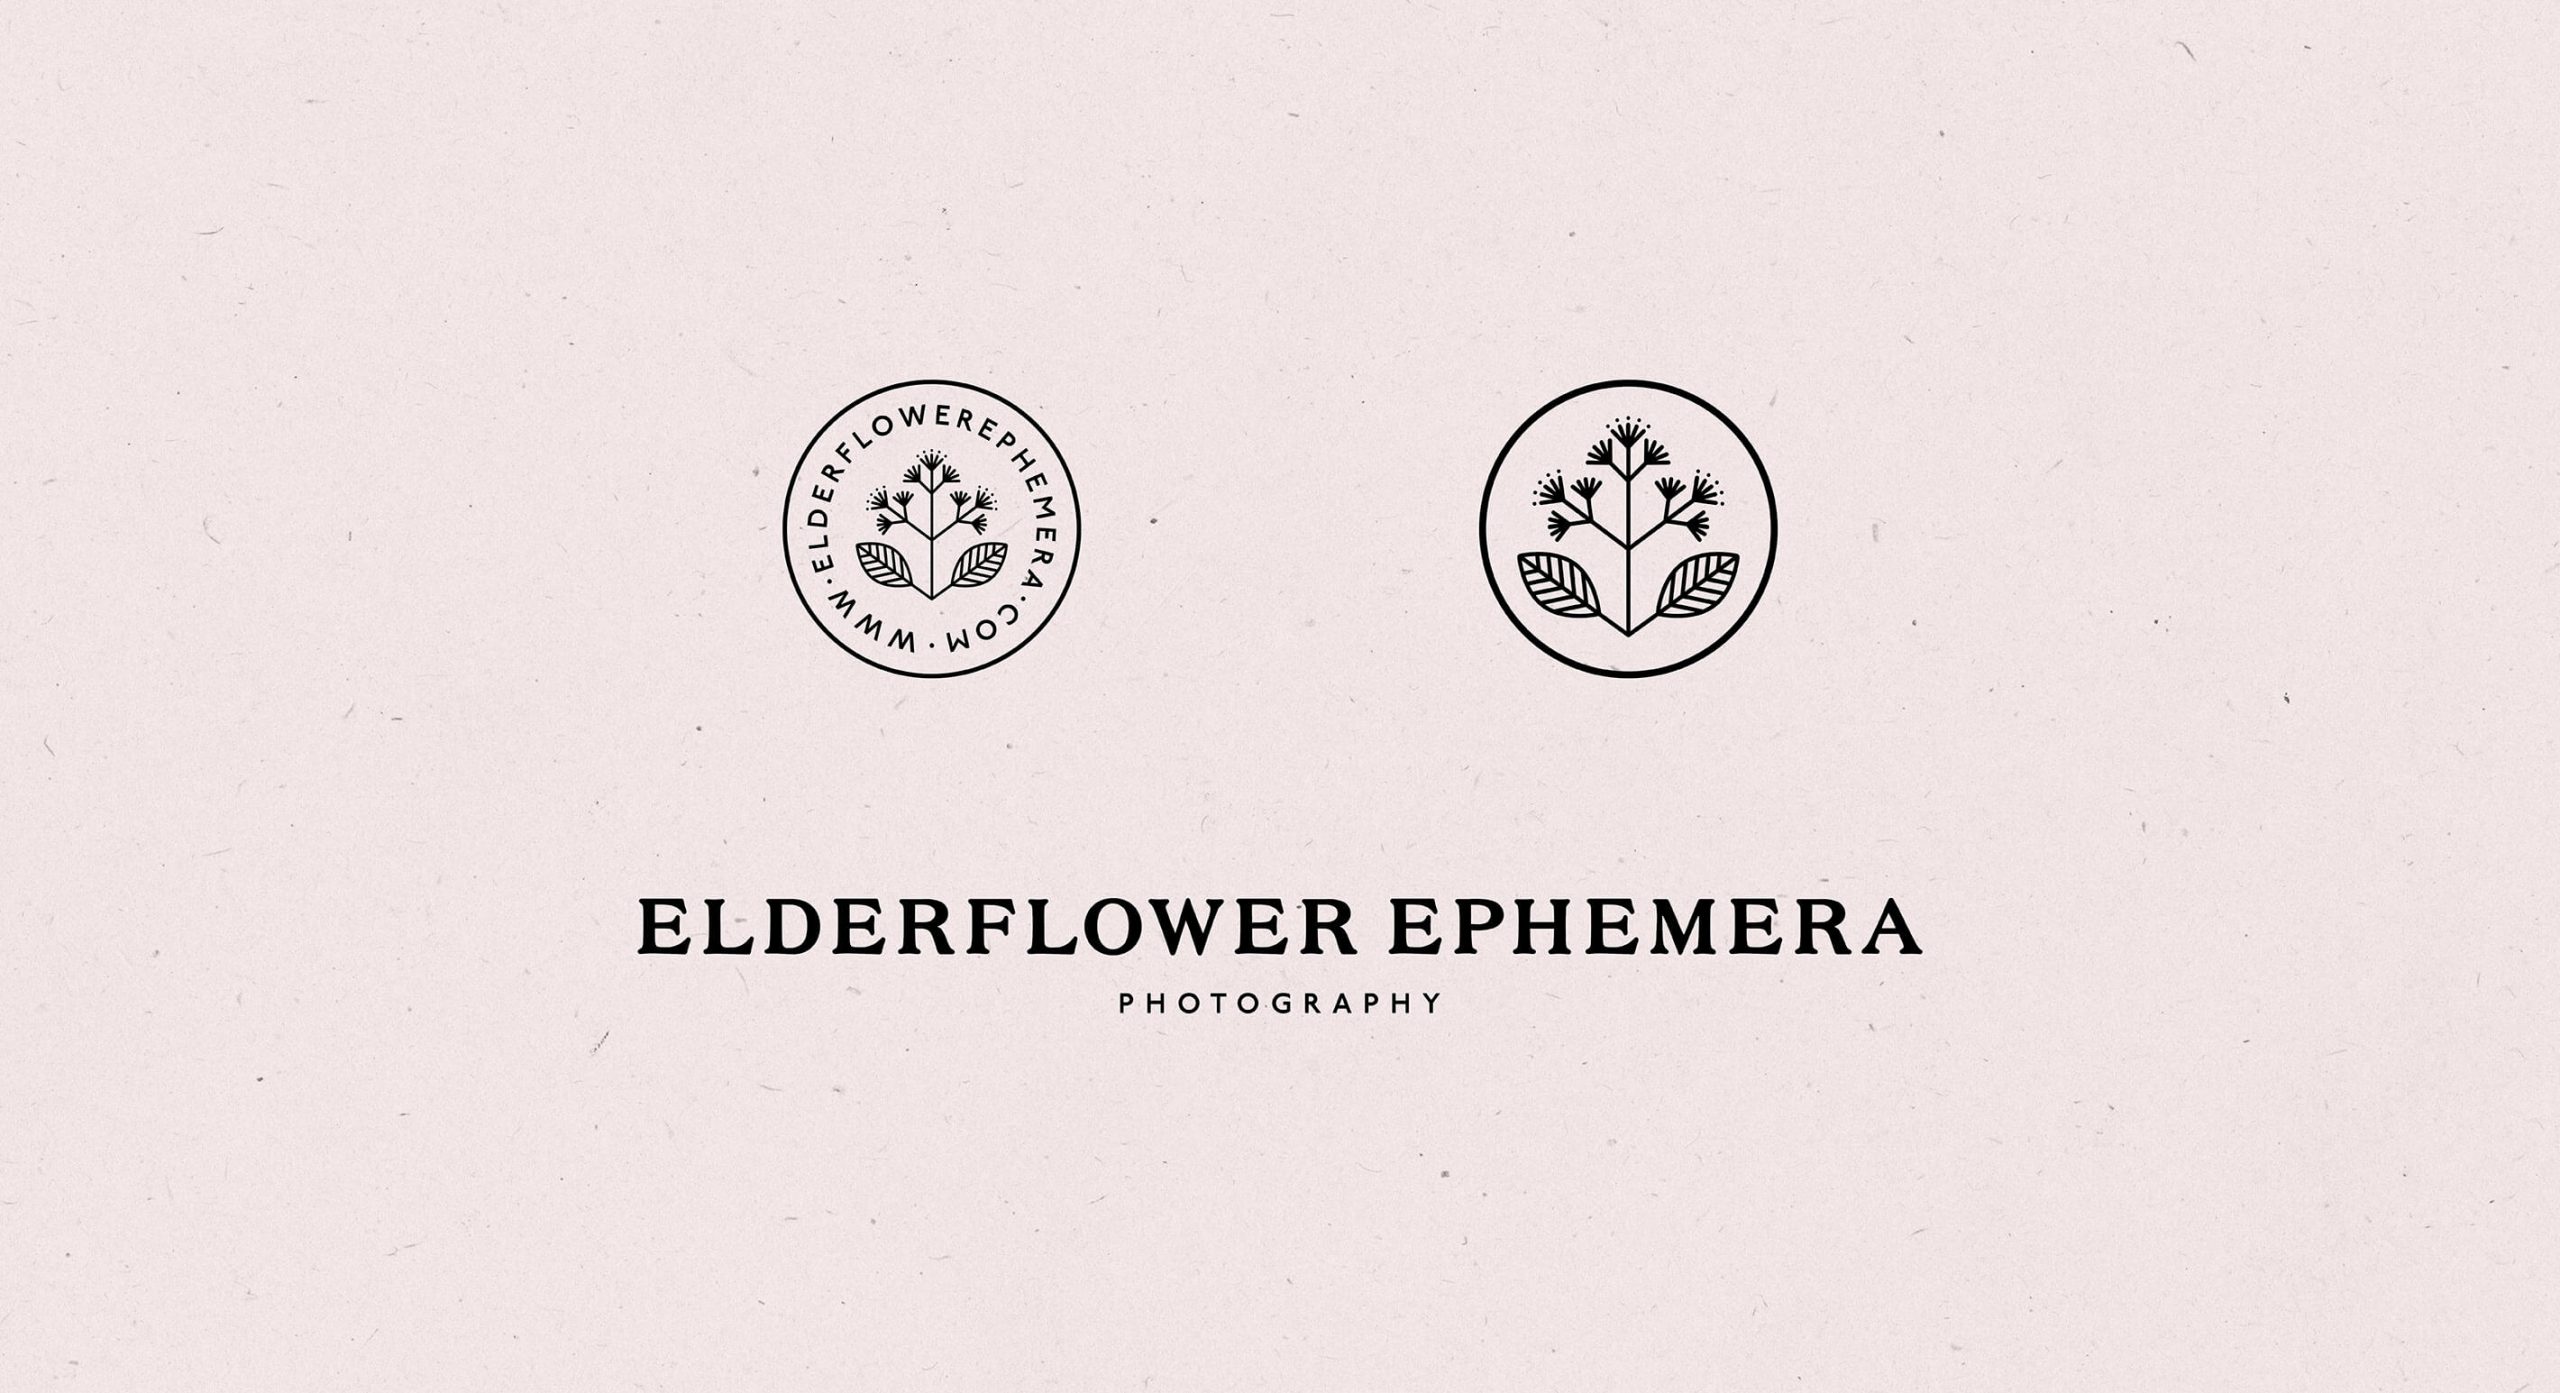 Obscurio & Co brand identity design for film photographer elderflower ephemera